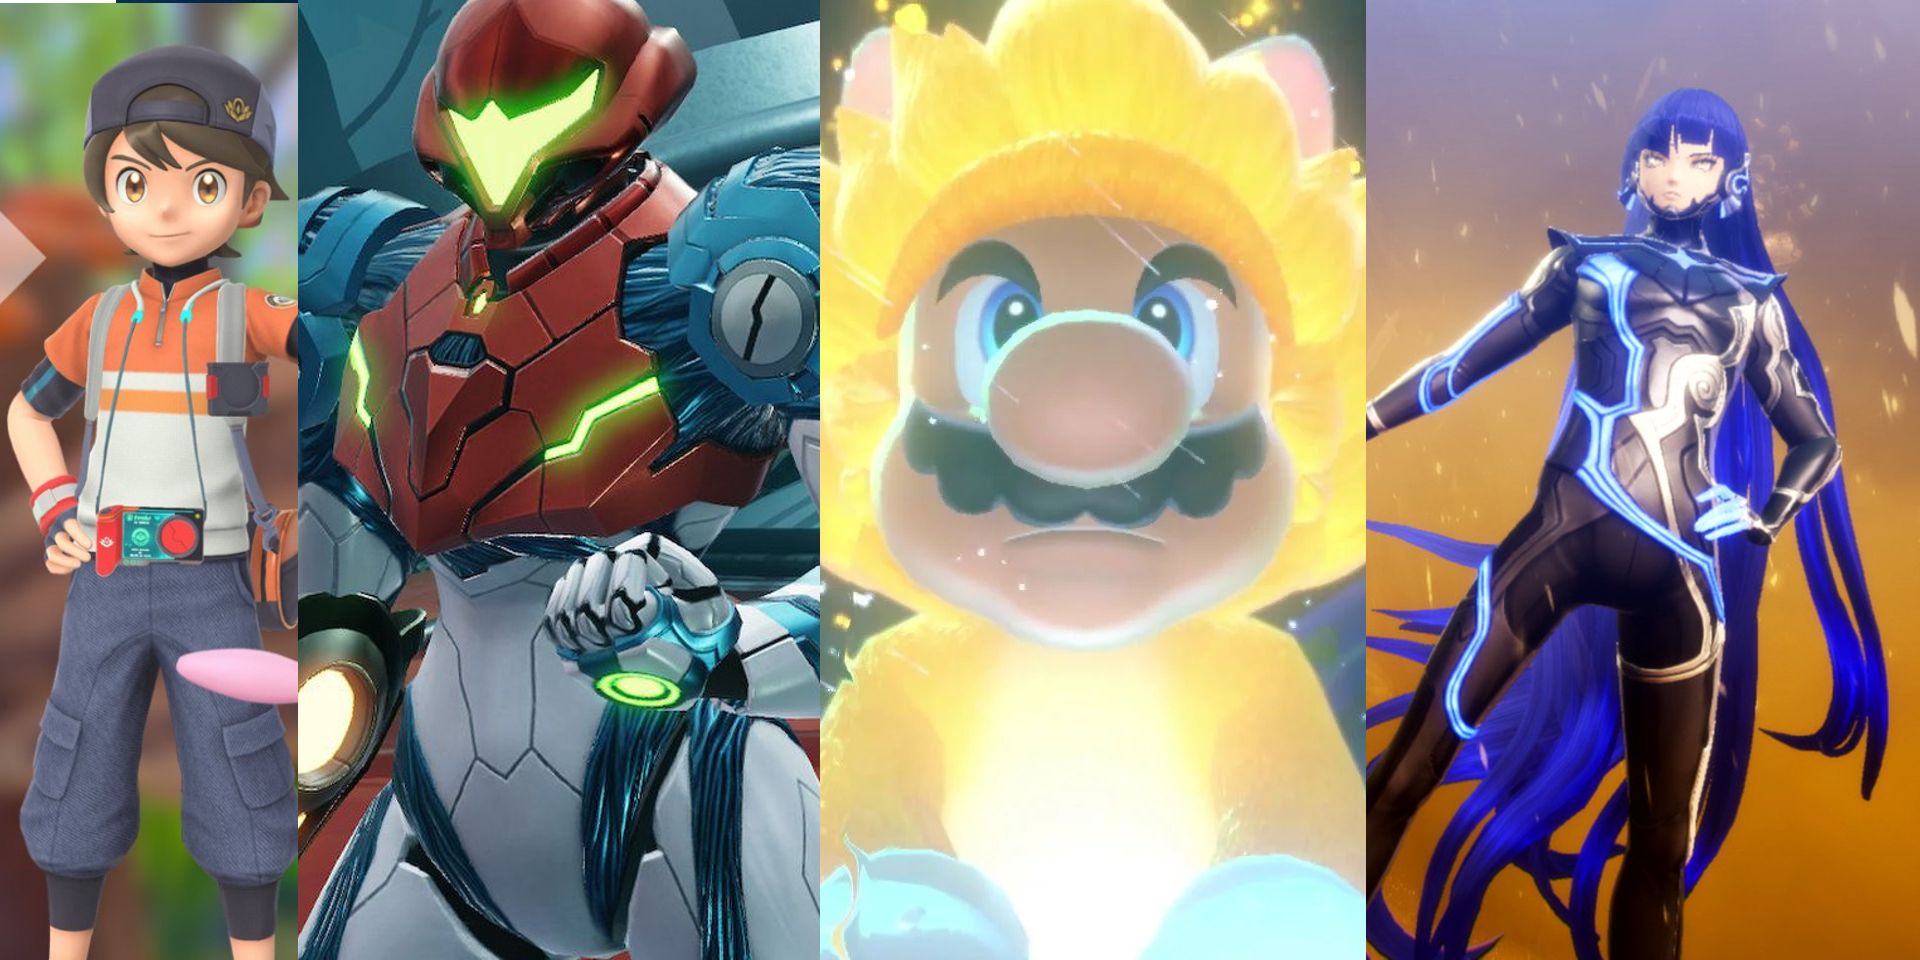 Nintendo Best Games 2021 Pokémon Metroid Dread Mario Bowser's Fury Shin Megami Tensei V